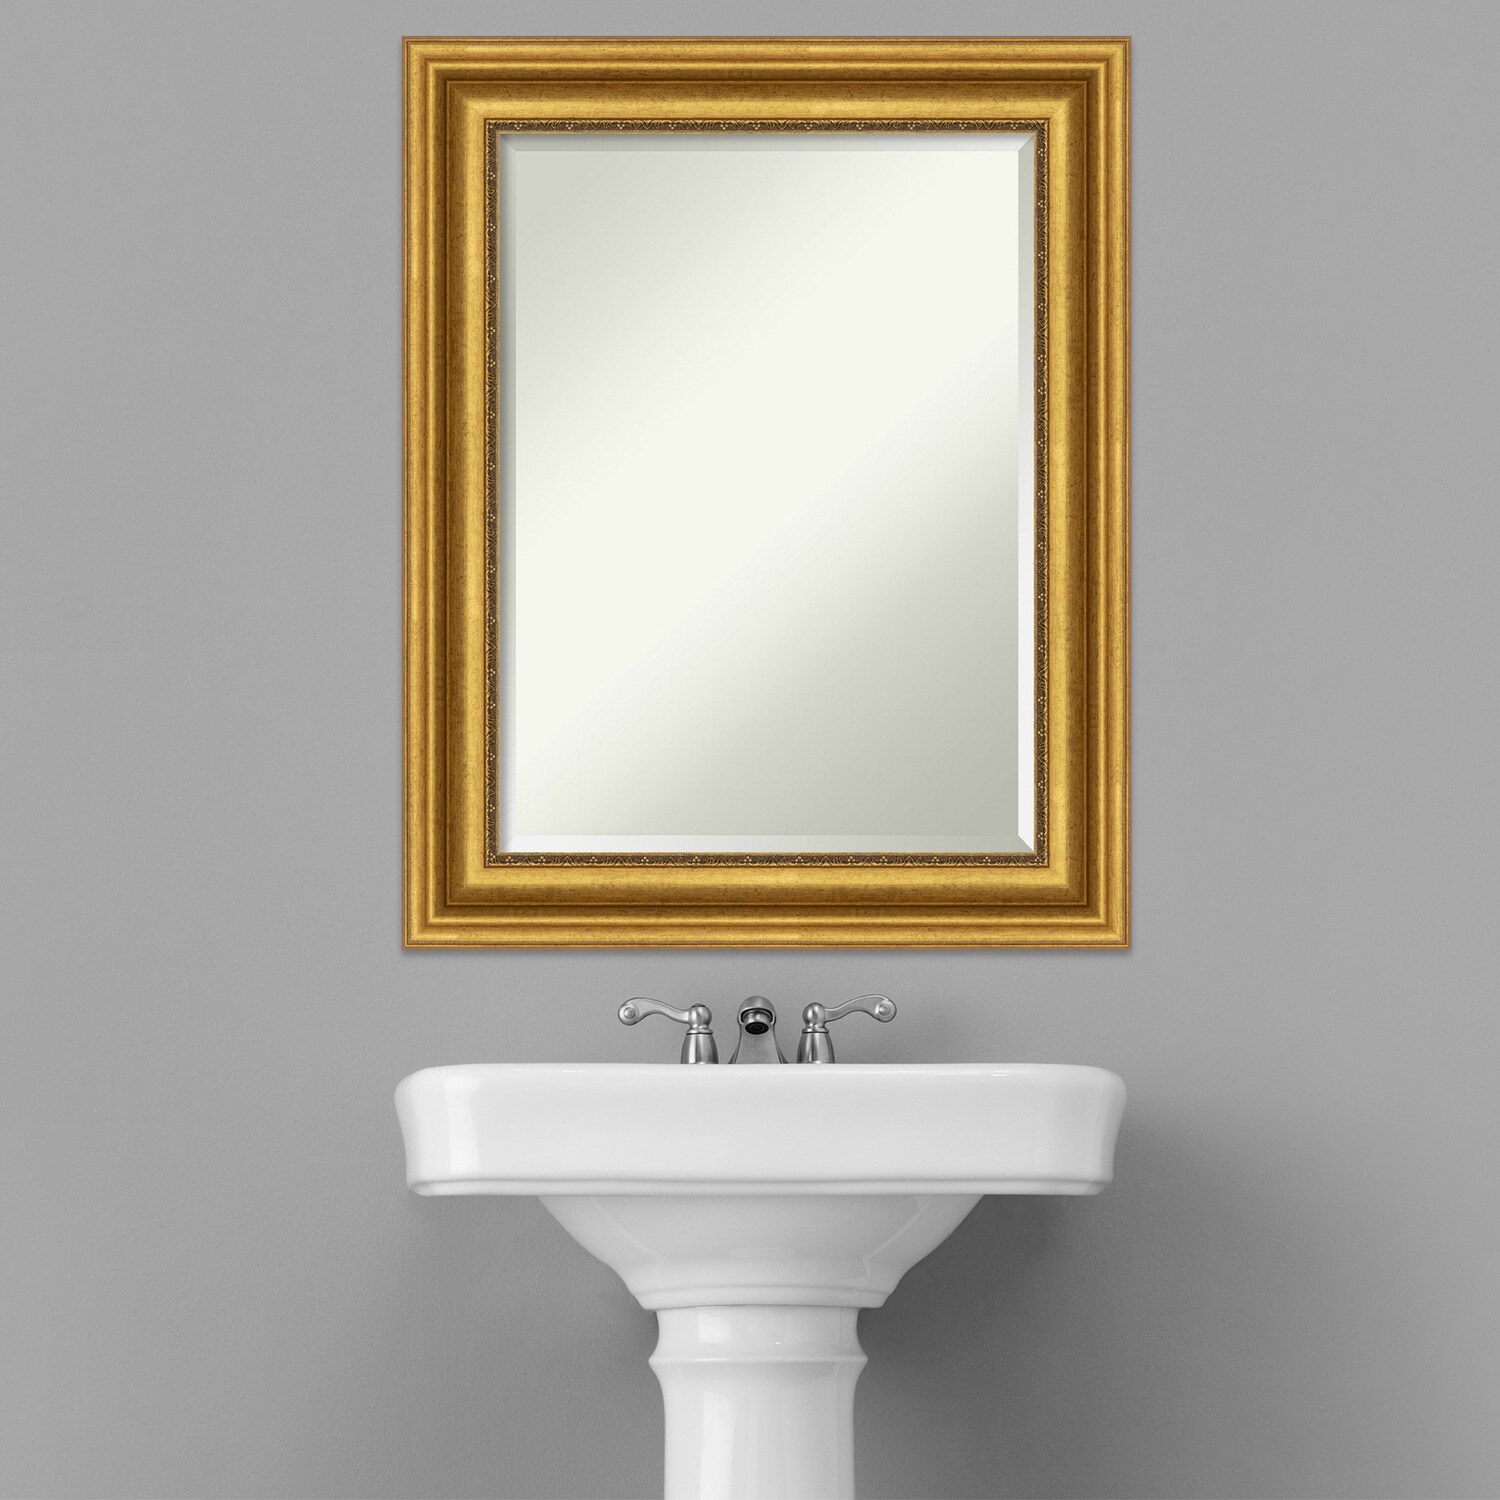 Beveled Bathroom Wall Mirror - Parlor Gold Frame